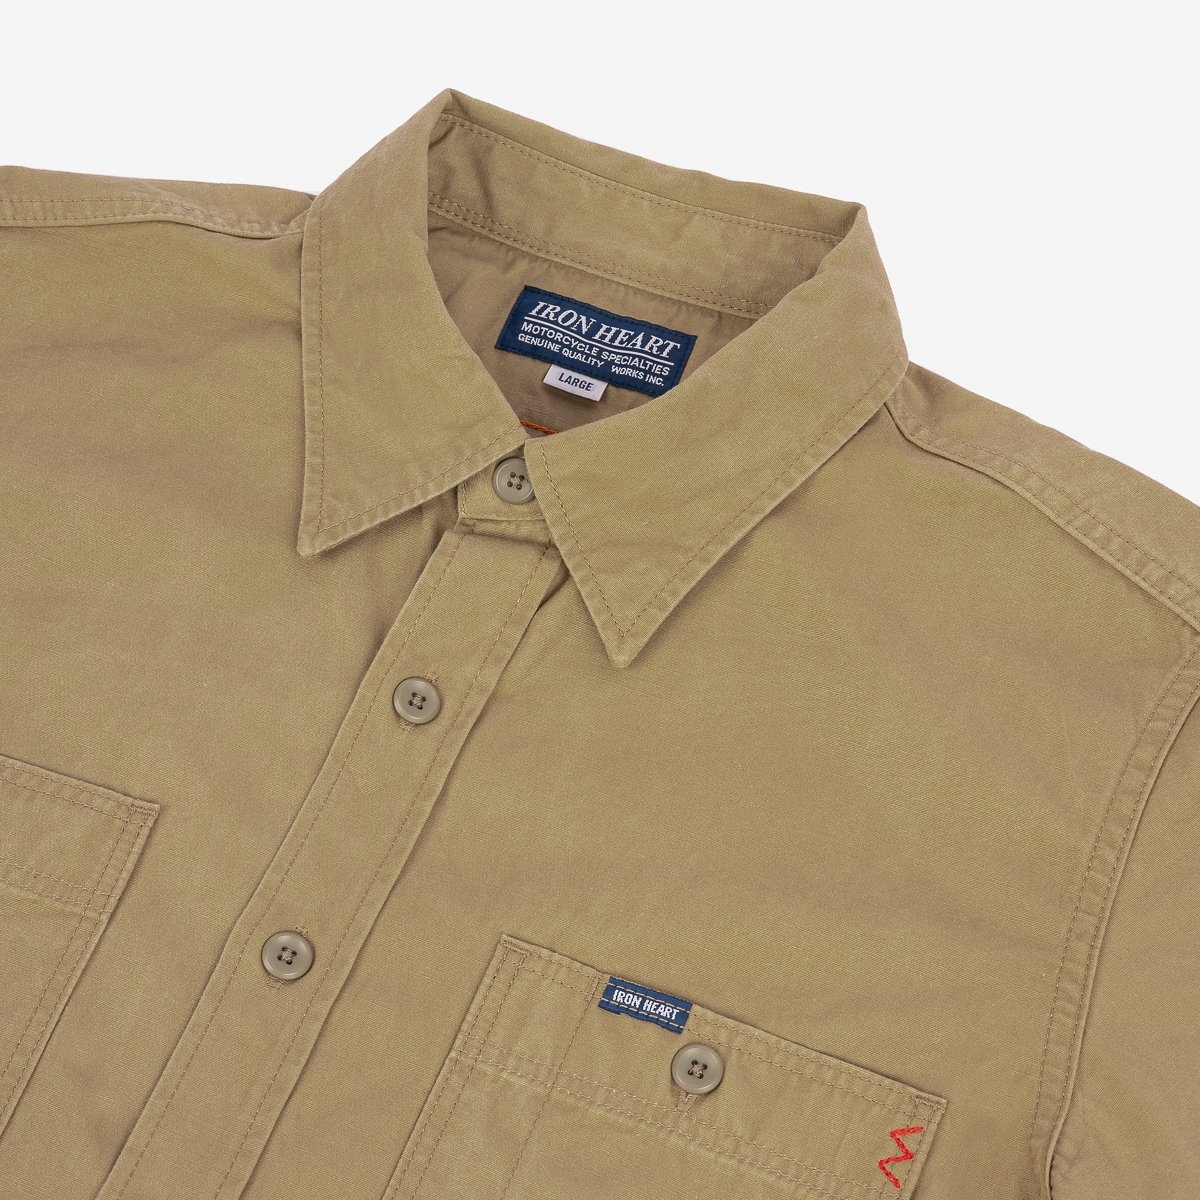 IHSH-393-KHA 7oz Fatigue Cloth Short Sleeved Work Shirt - Khaki - 14